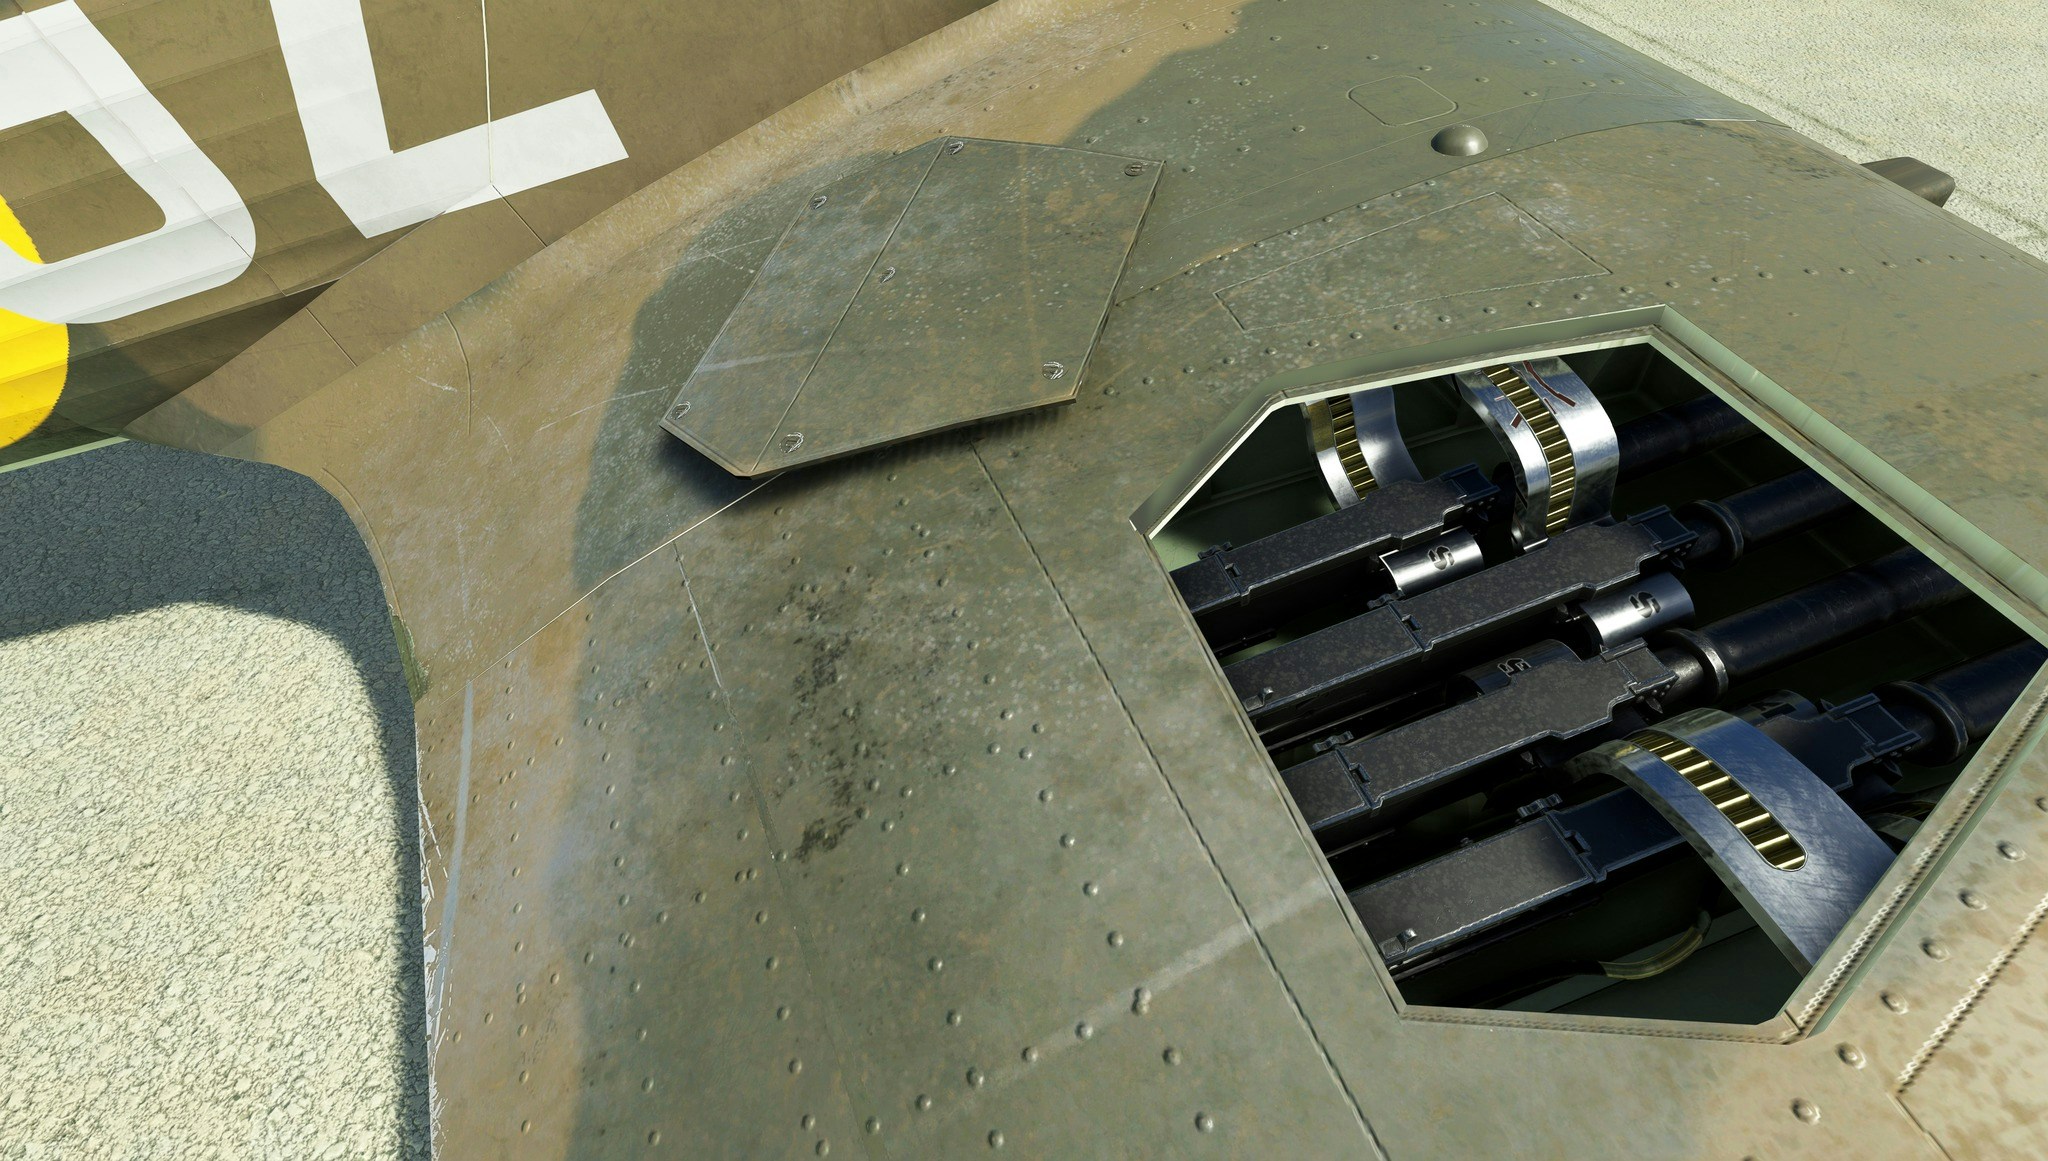 Aeroplane Heaven Announces Hawker Hurricane Mk.1